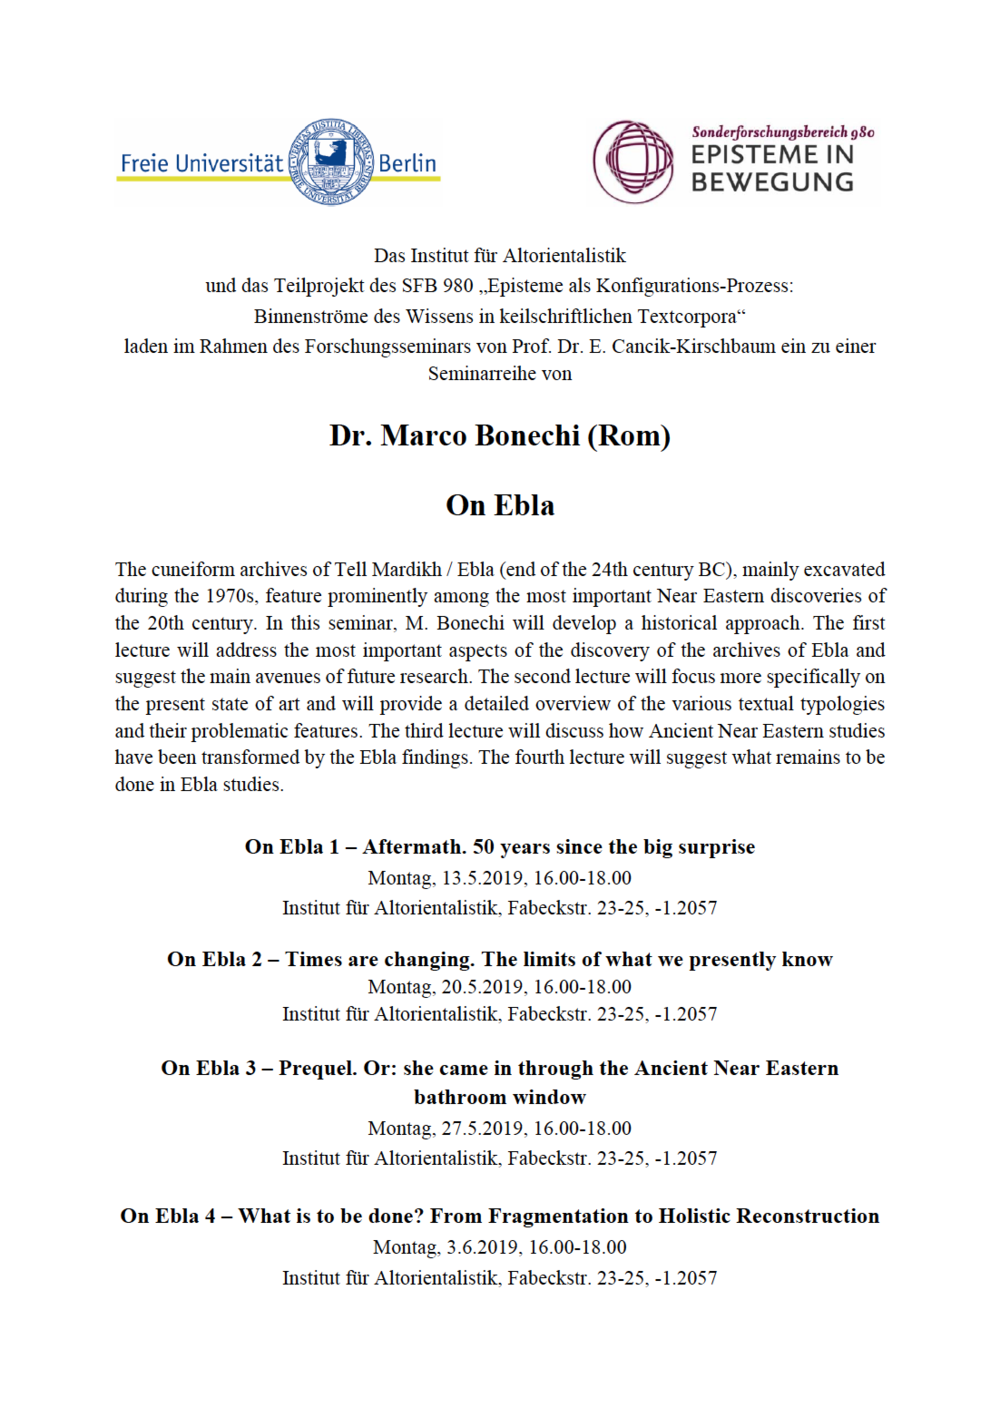 Dr. Marco Bonechi – "On Ebla"